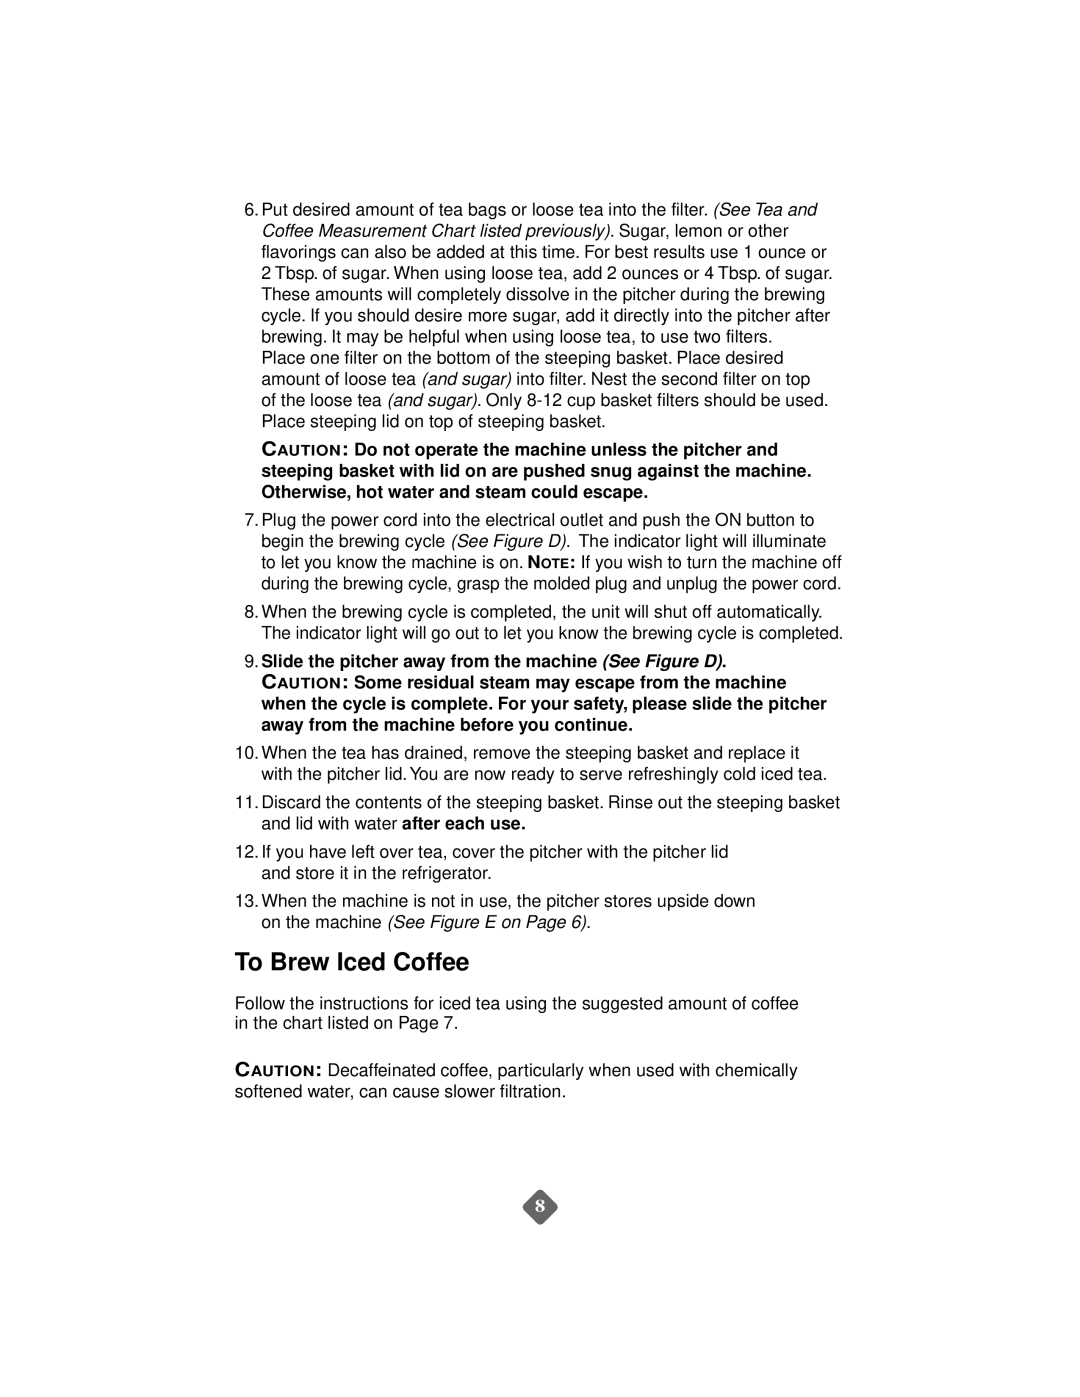 Mr. Coffee TM1 instruction manual To Brew Iced Coffee 